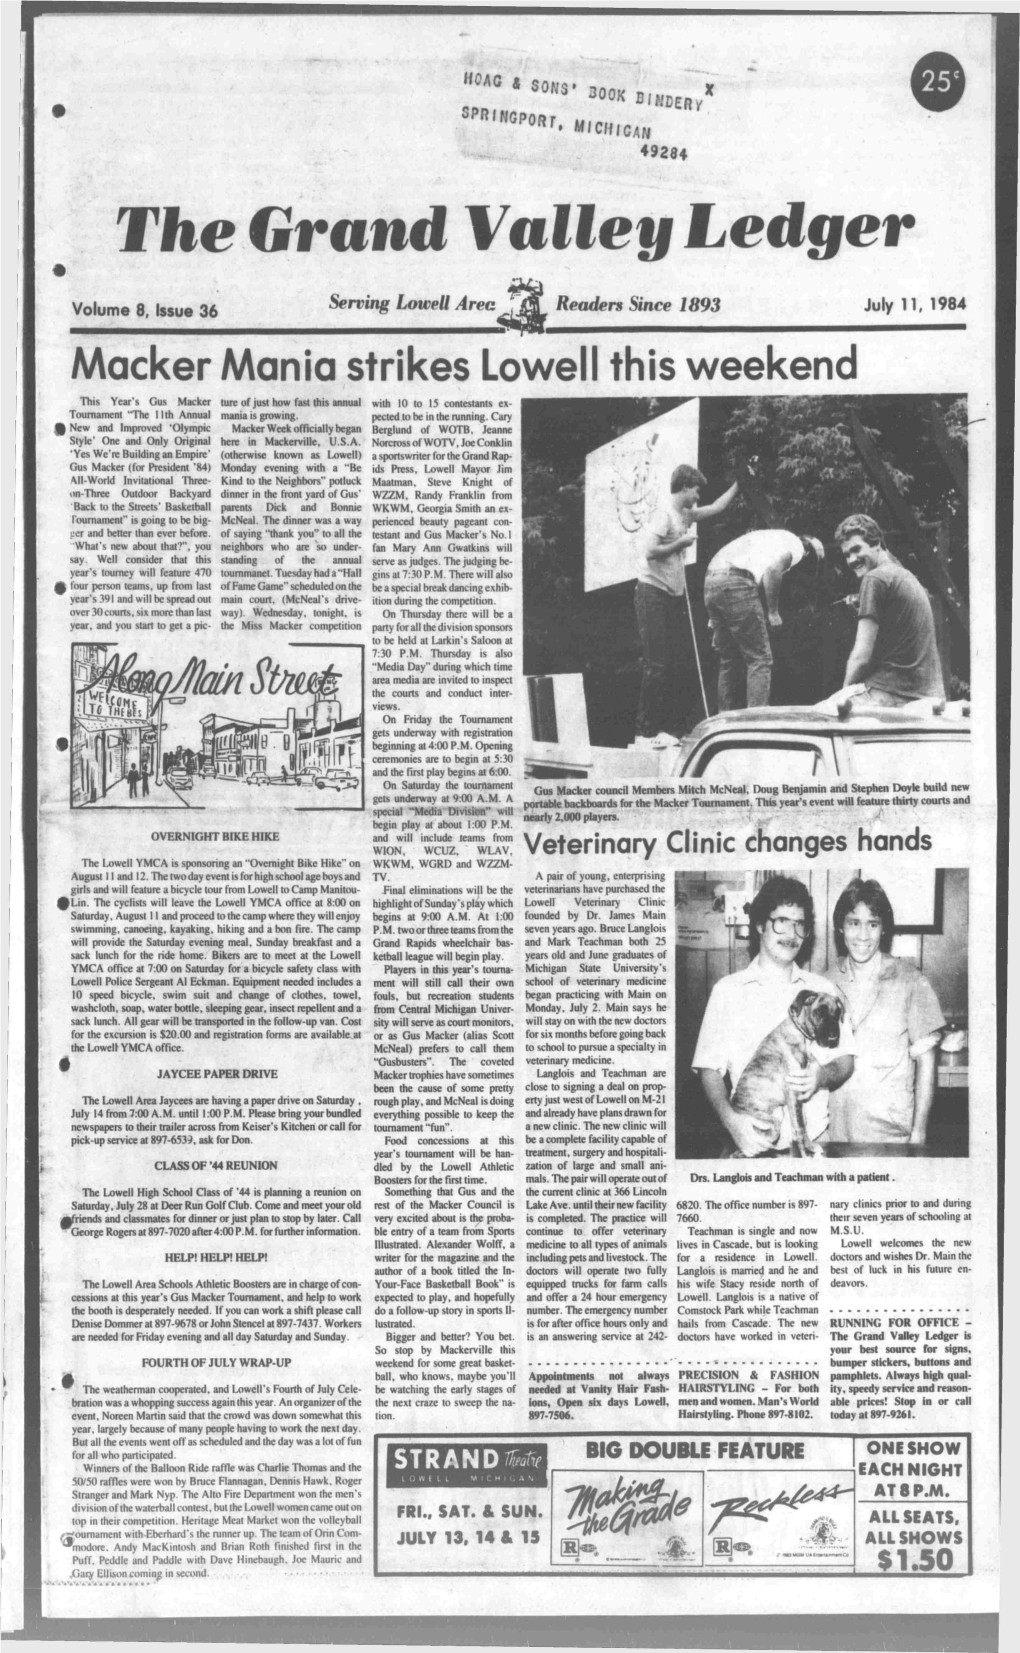 Mocker Mania Strikes Lowell This Weekend